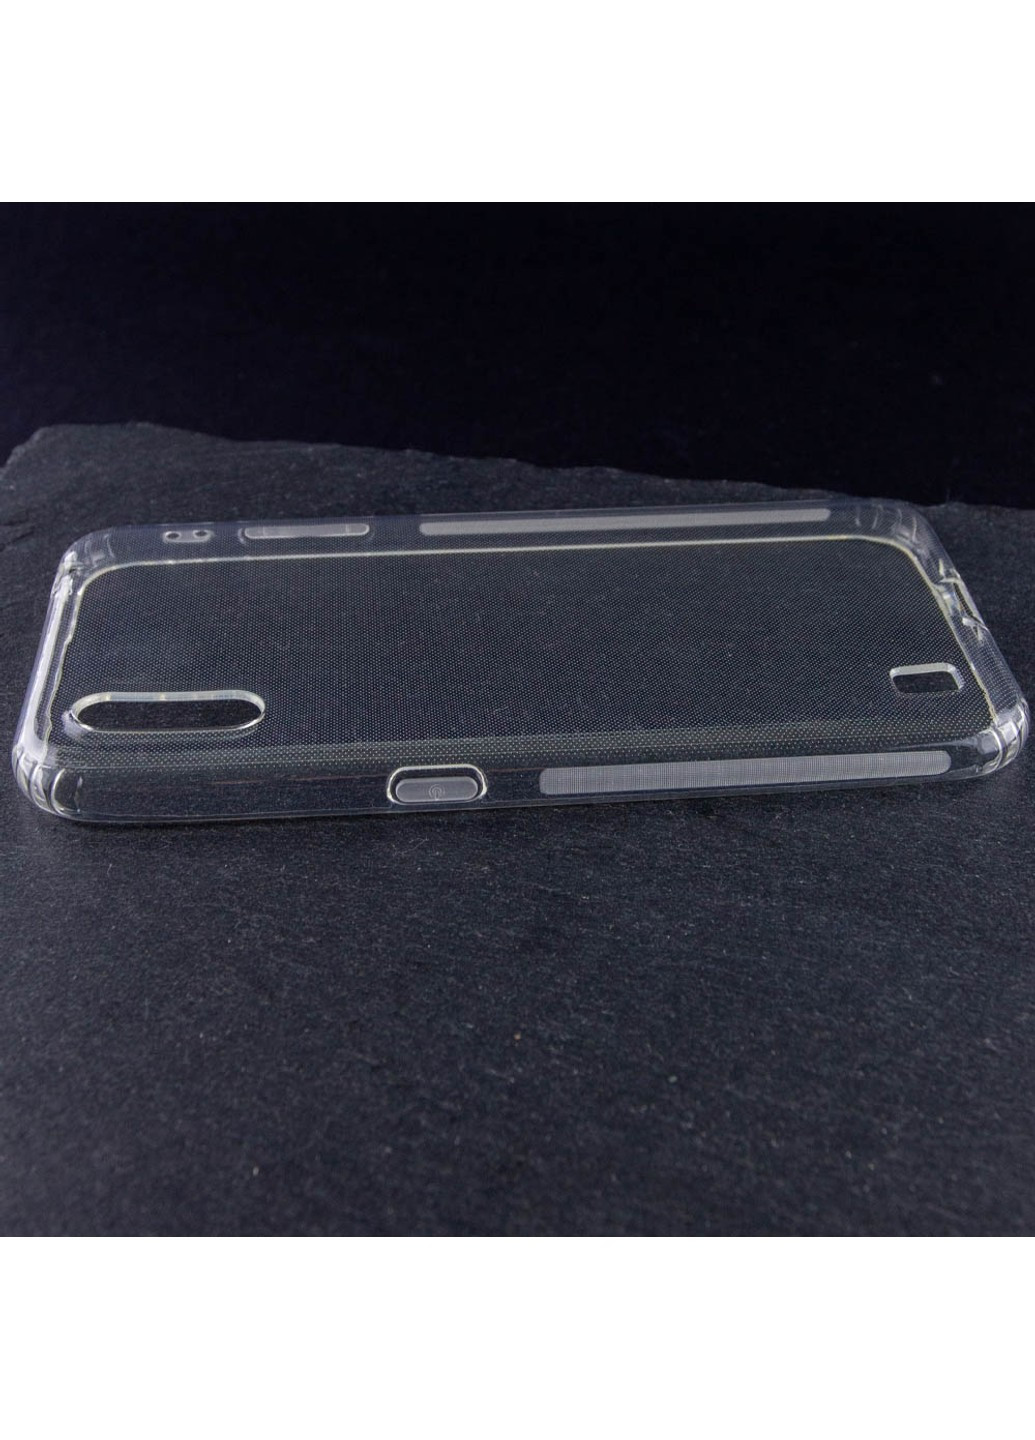 TPU чехол Transparent 1,0 mm для Samsung Galaxy A01 Getman (261334613)